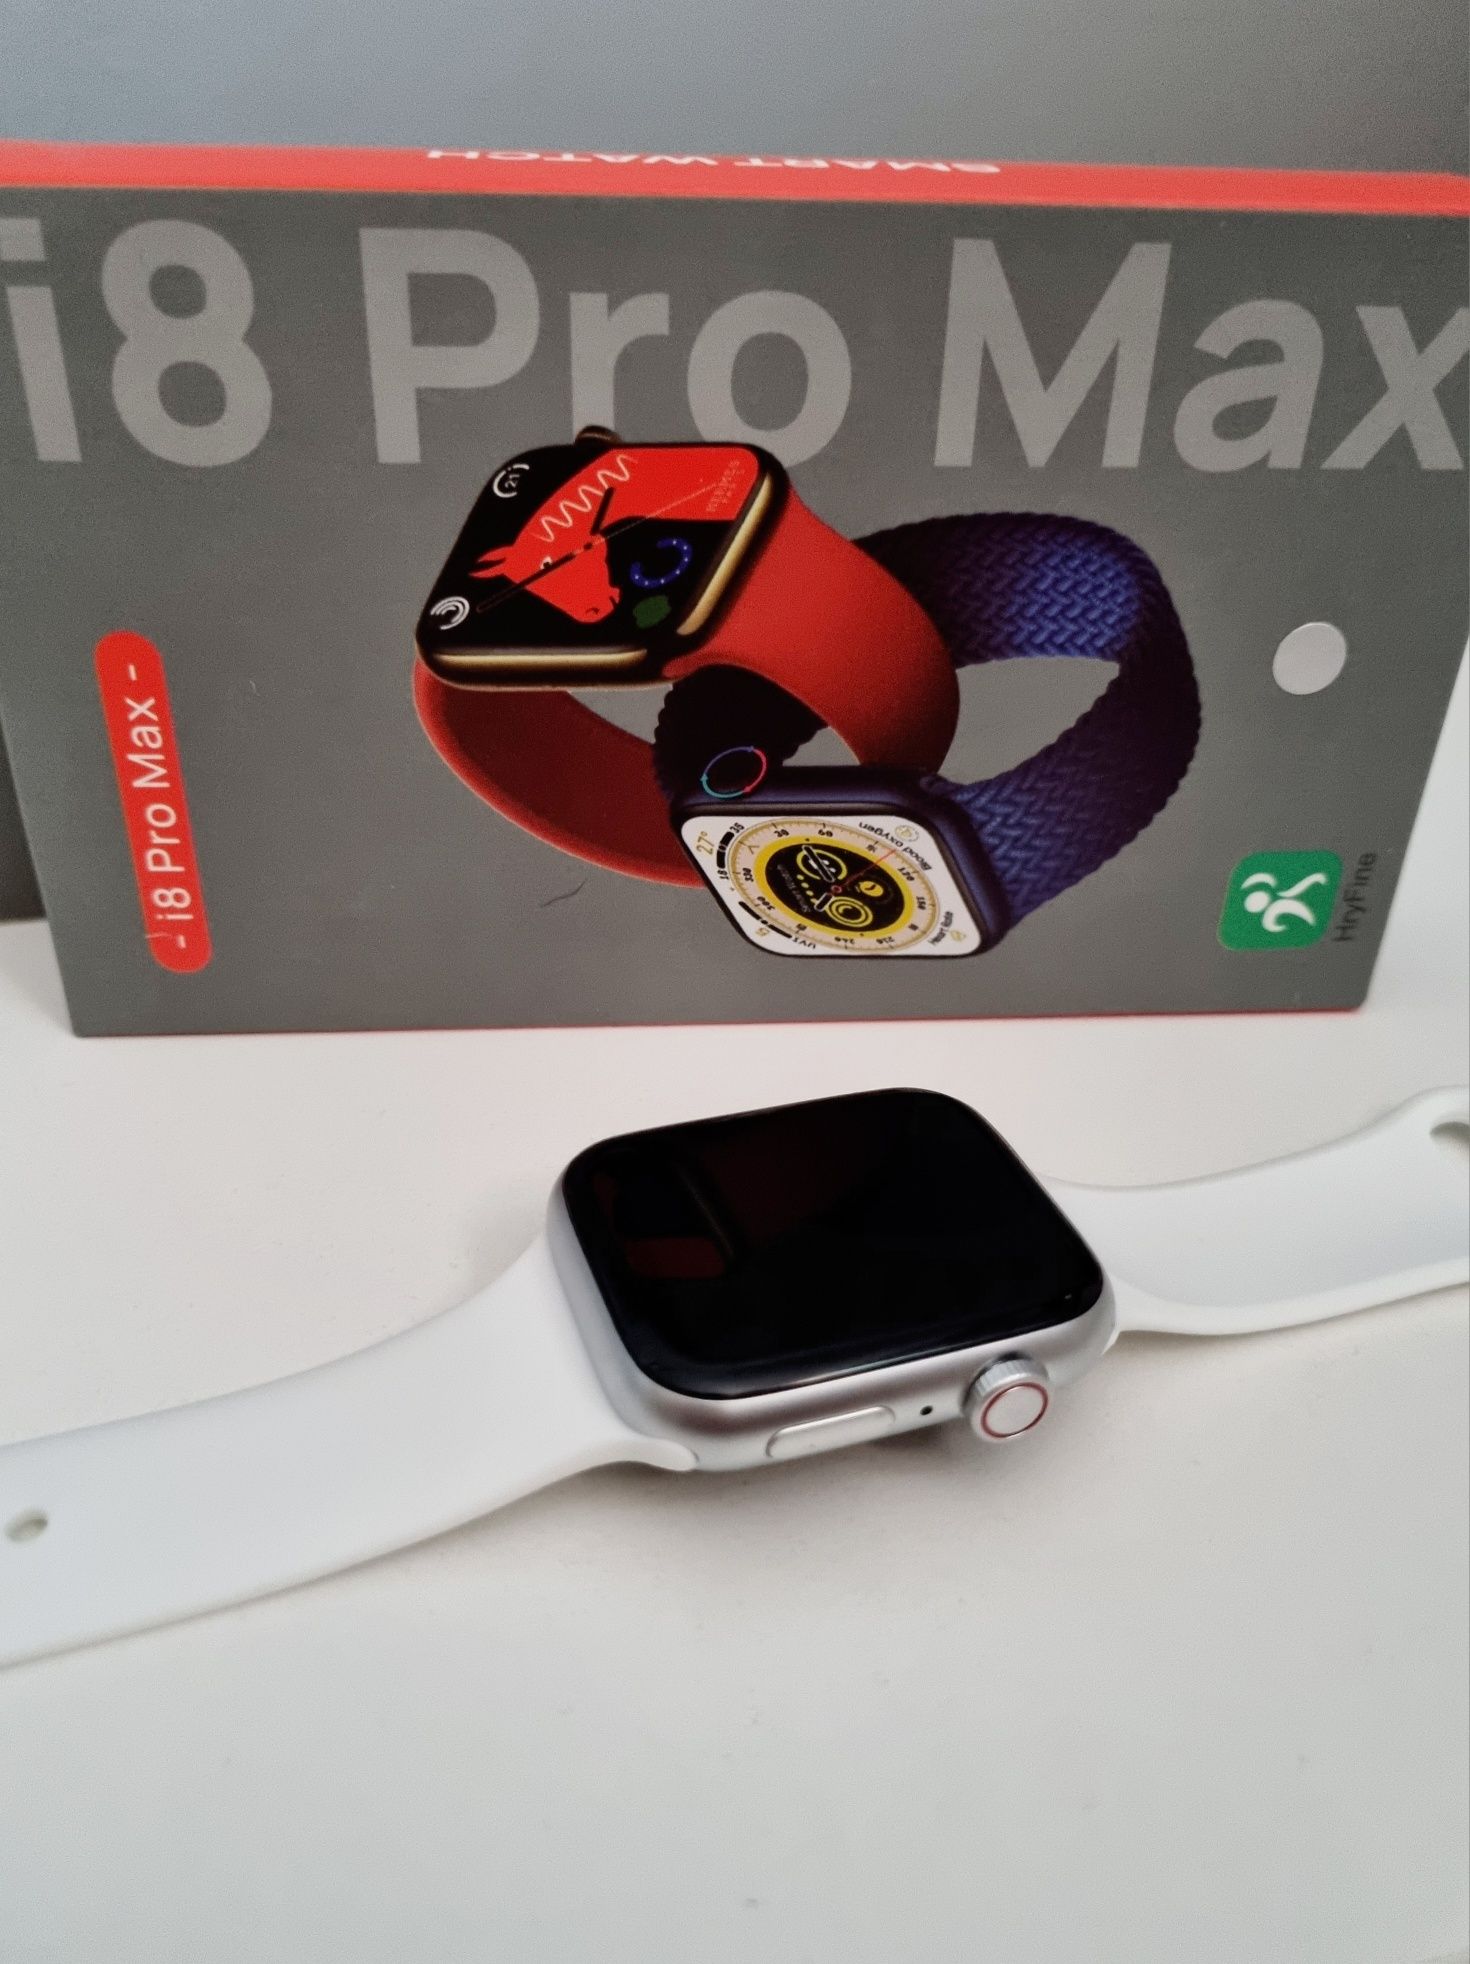 Smartwatch I7 Pro max